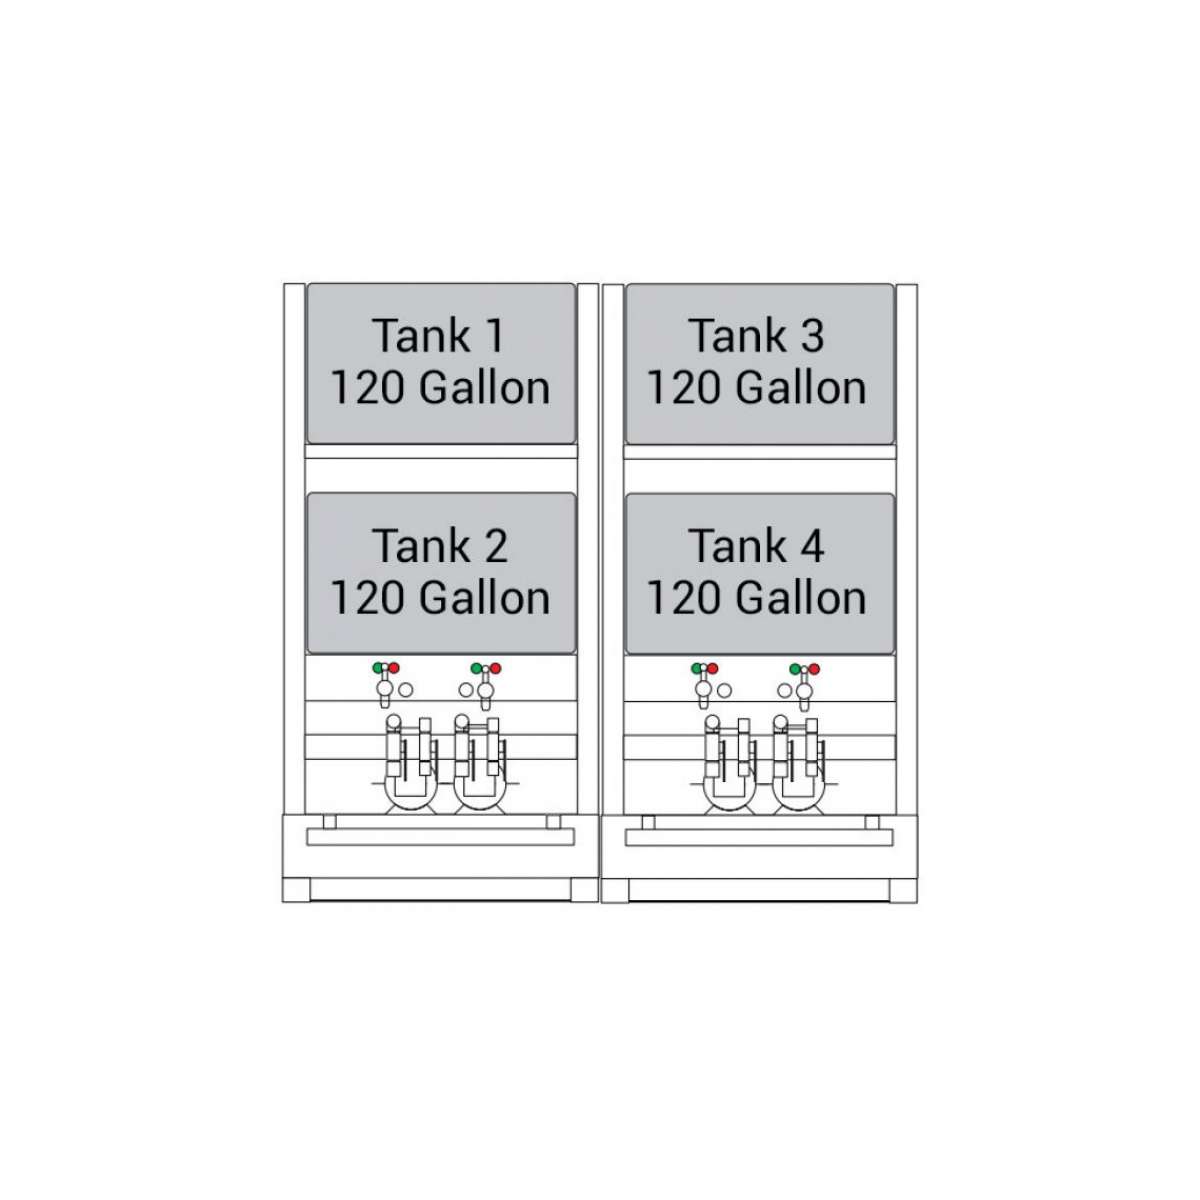 Bulk Oil Storage System Advanced - 4 x 120 Gallon